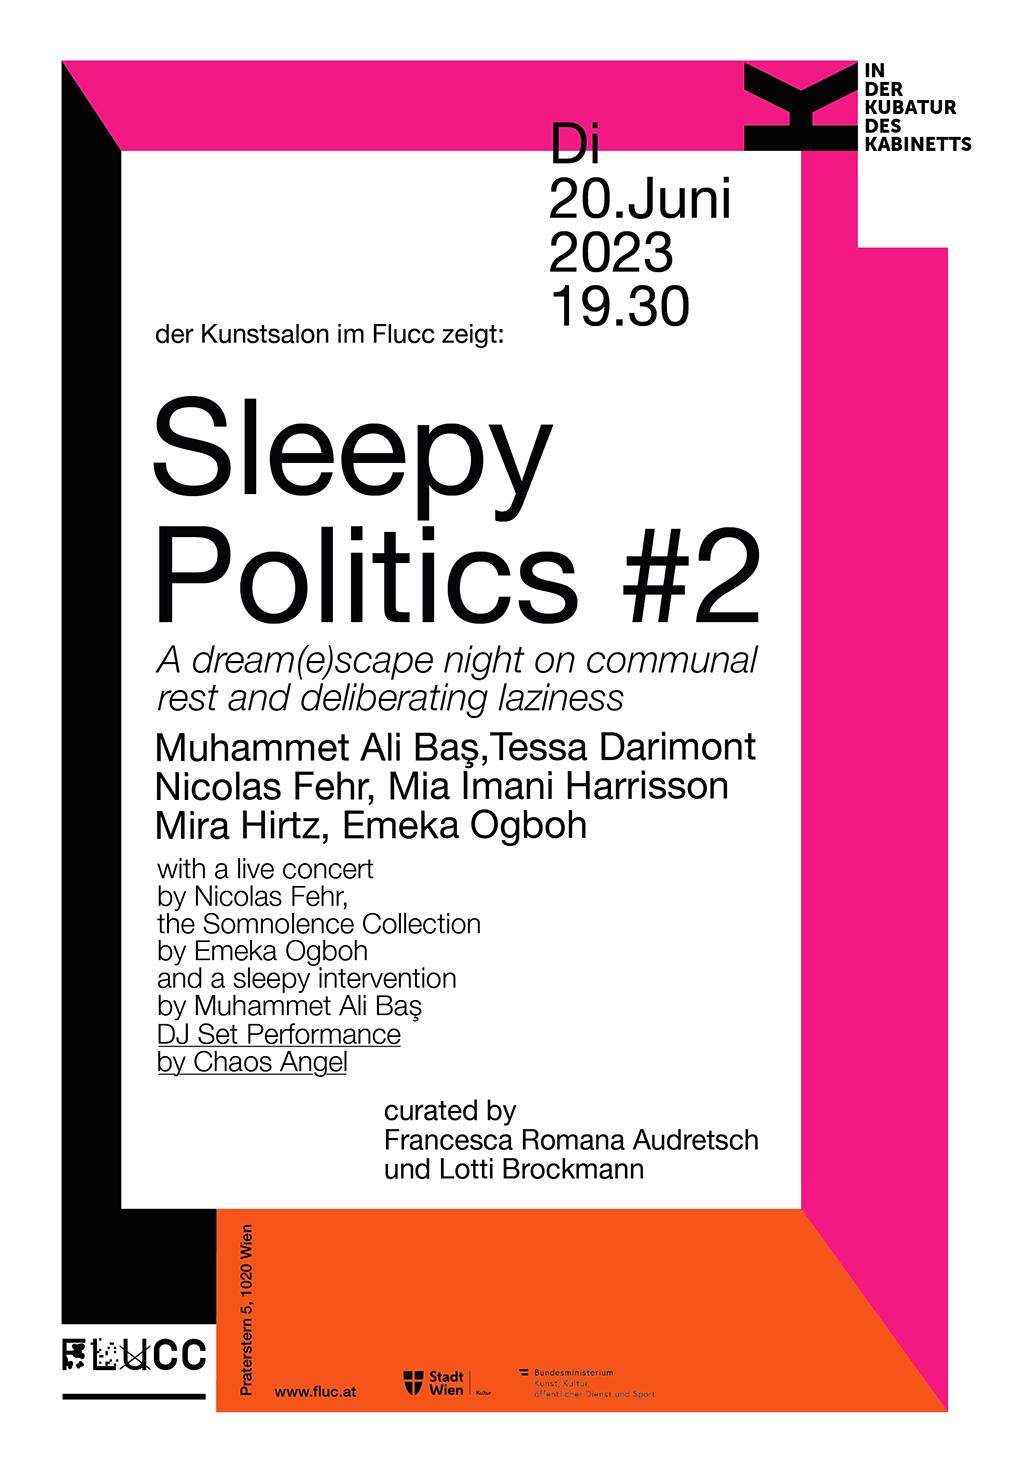 Kubatur #4 - Sleepy Politics #2 am 20. June 2023 @ Fluc.